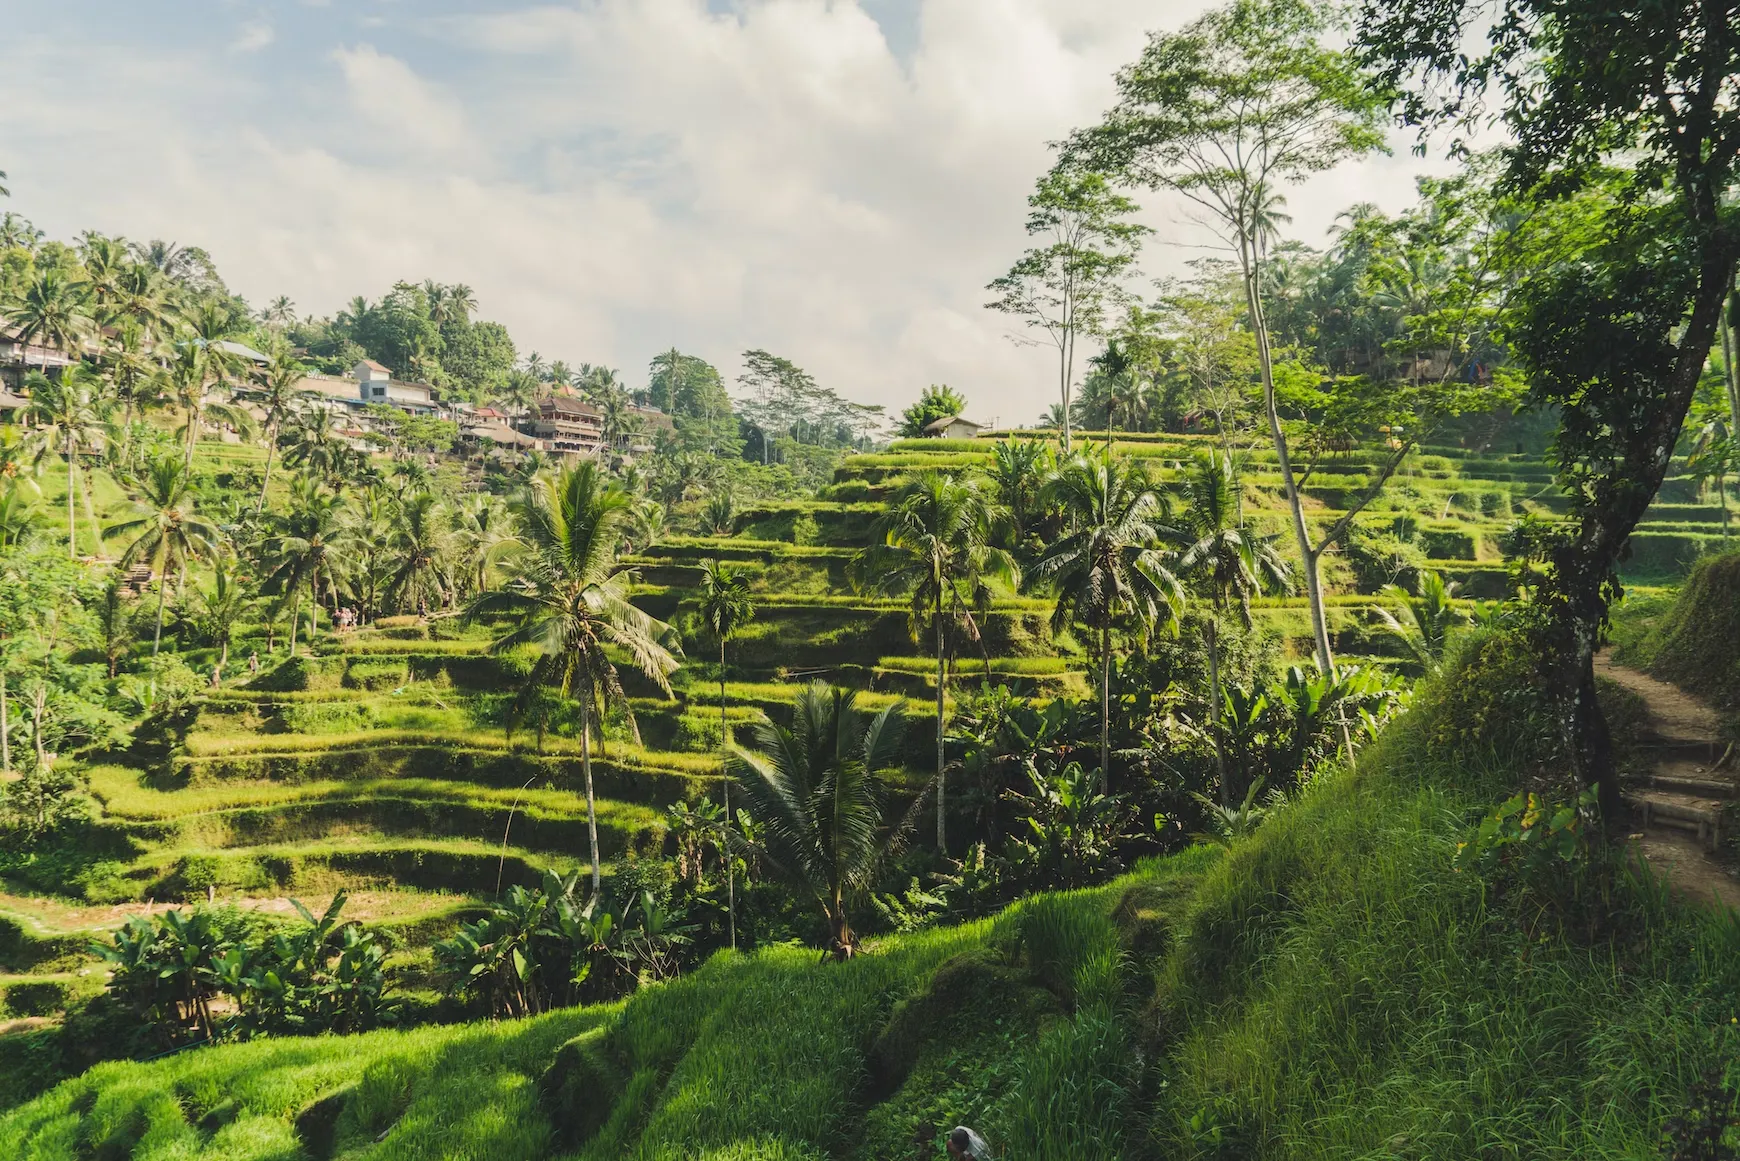 Tegallalang Rice Terraces, Bali. Source: Photo by Paolo Nicolello/unsplash.com